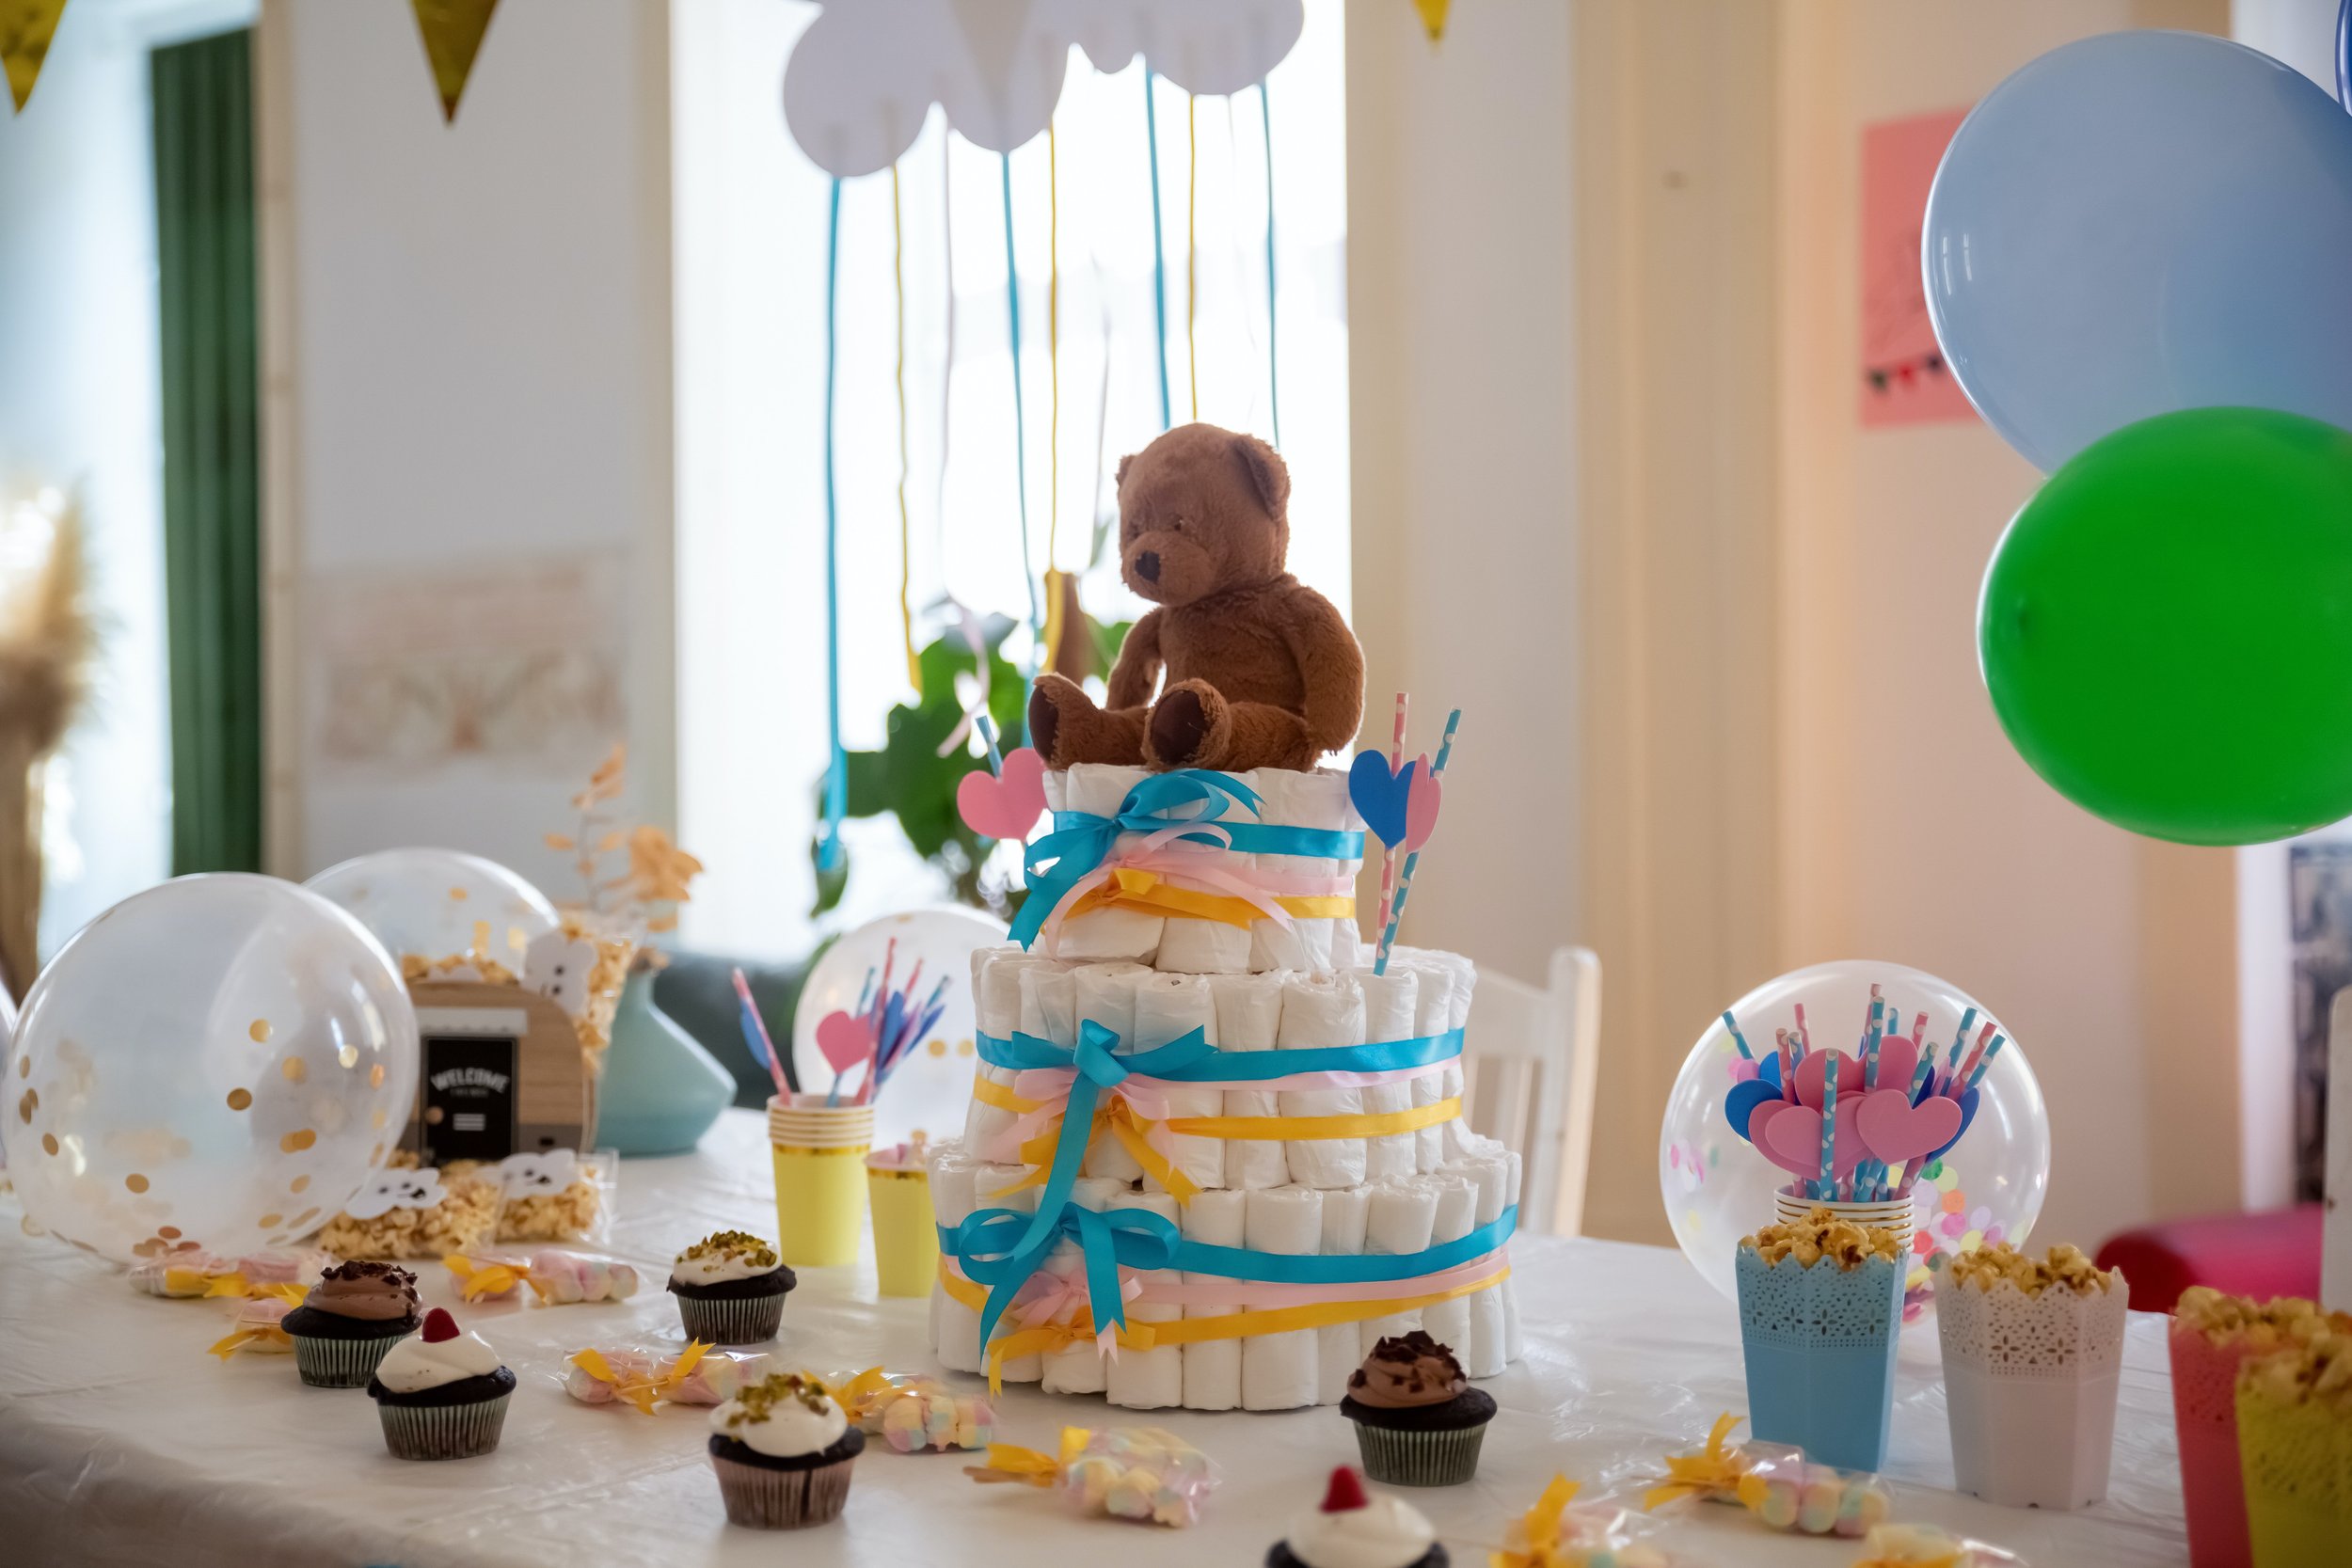 20 Unique Baby Shower Centerpieces That Brighten Up The Party